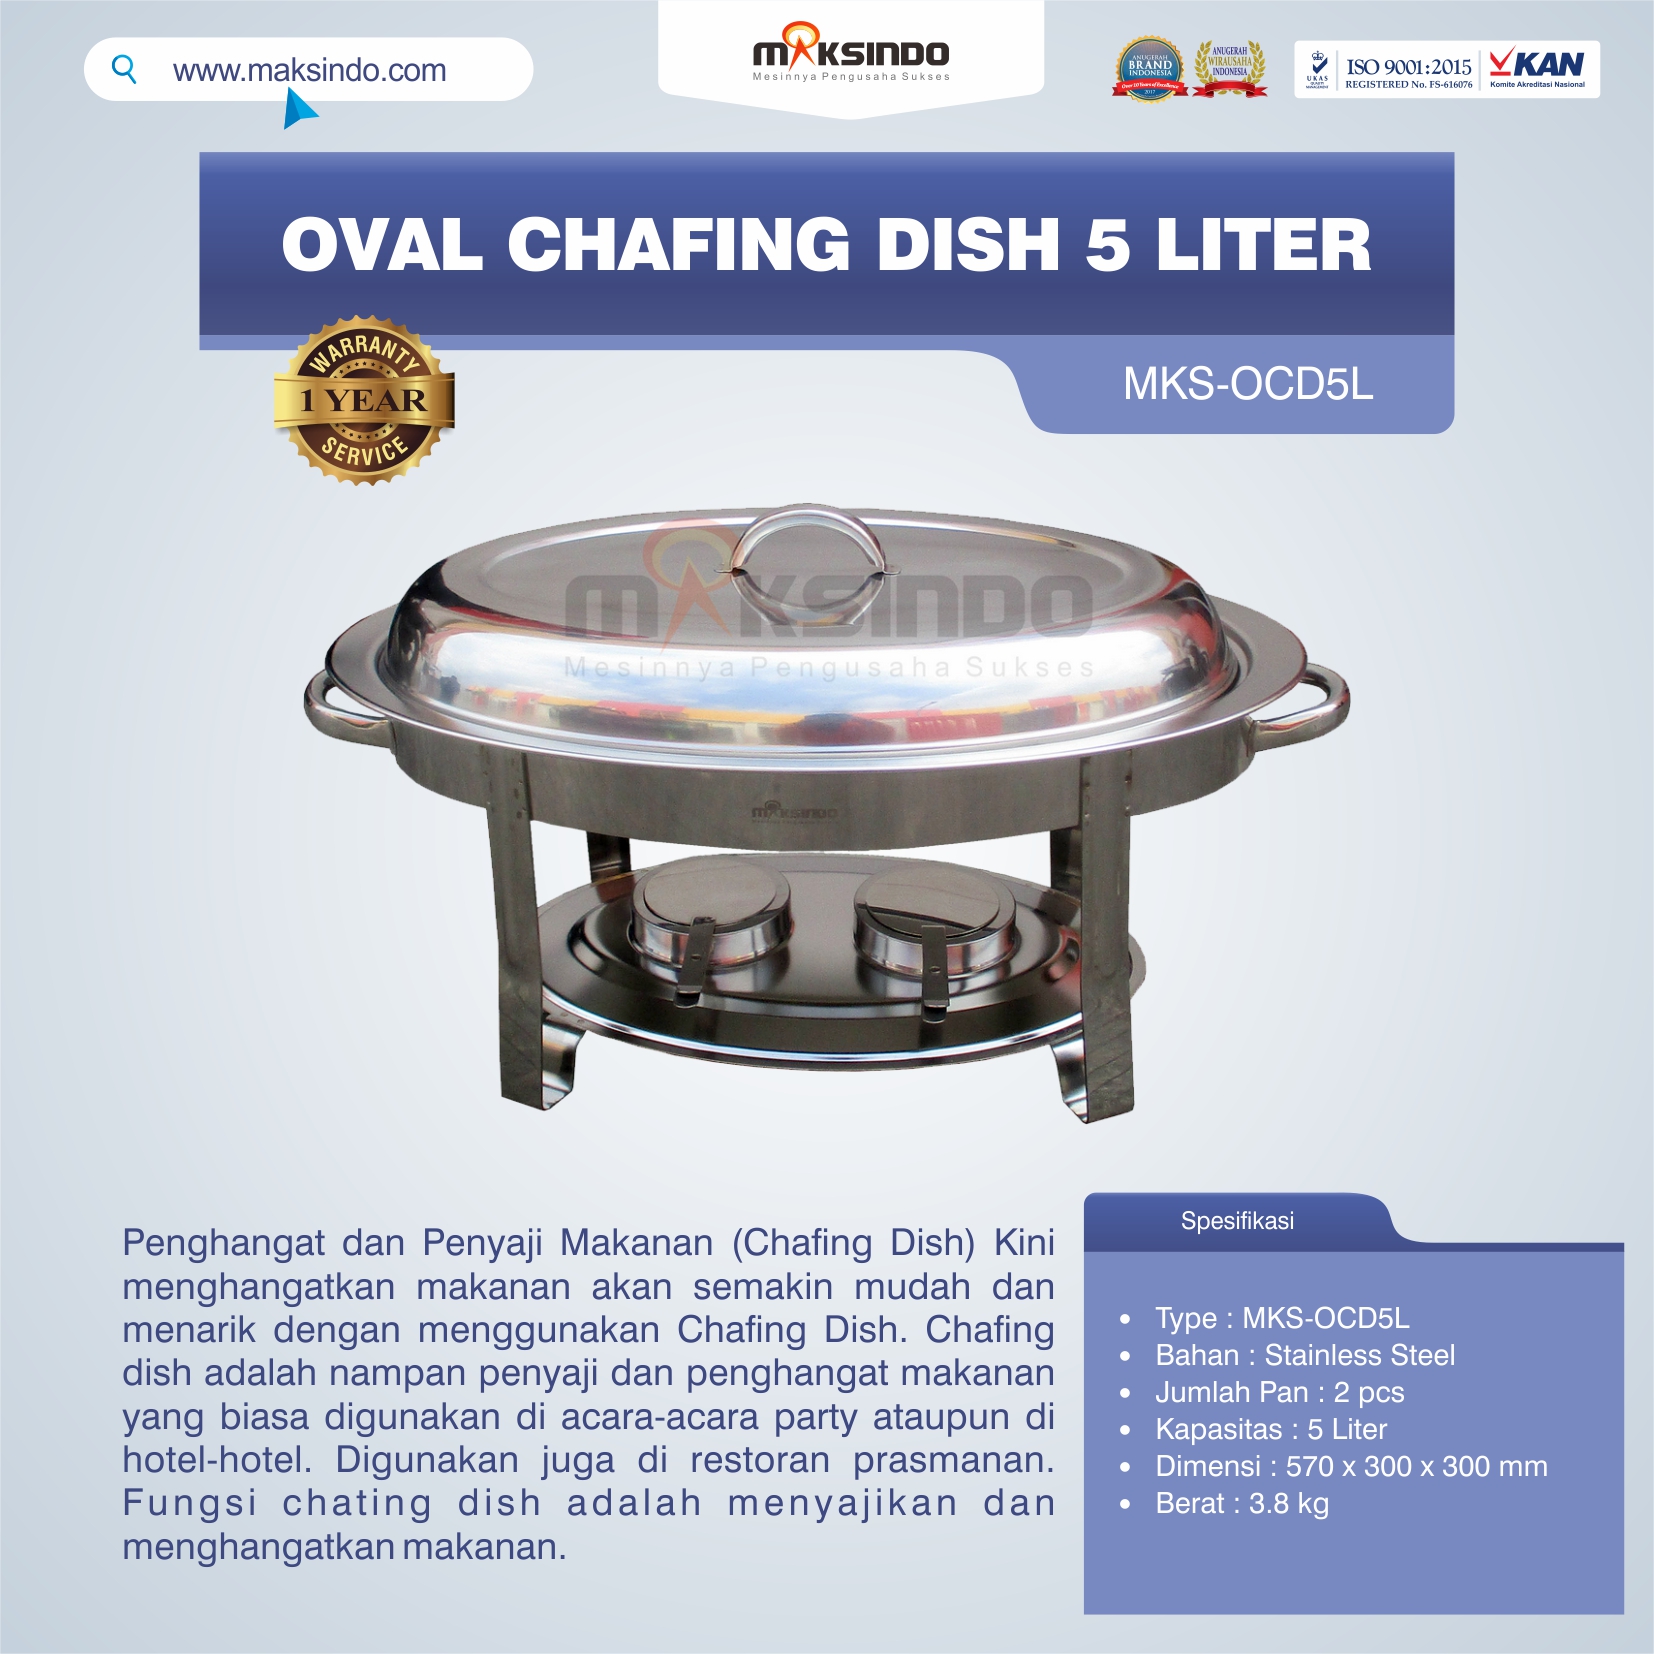 Jual Oval Chafing Dish 5 Liter di Palembang